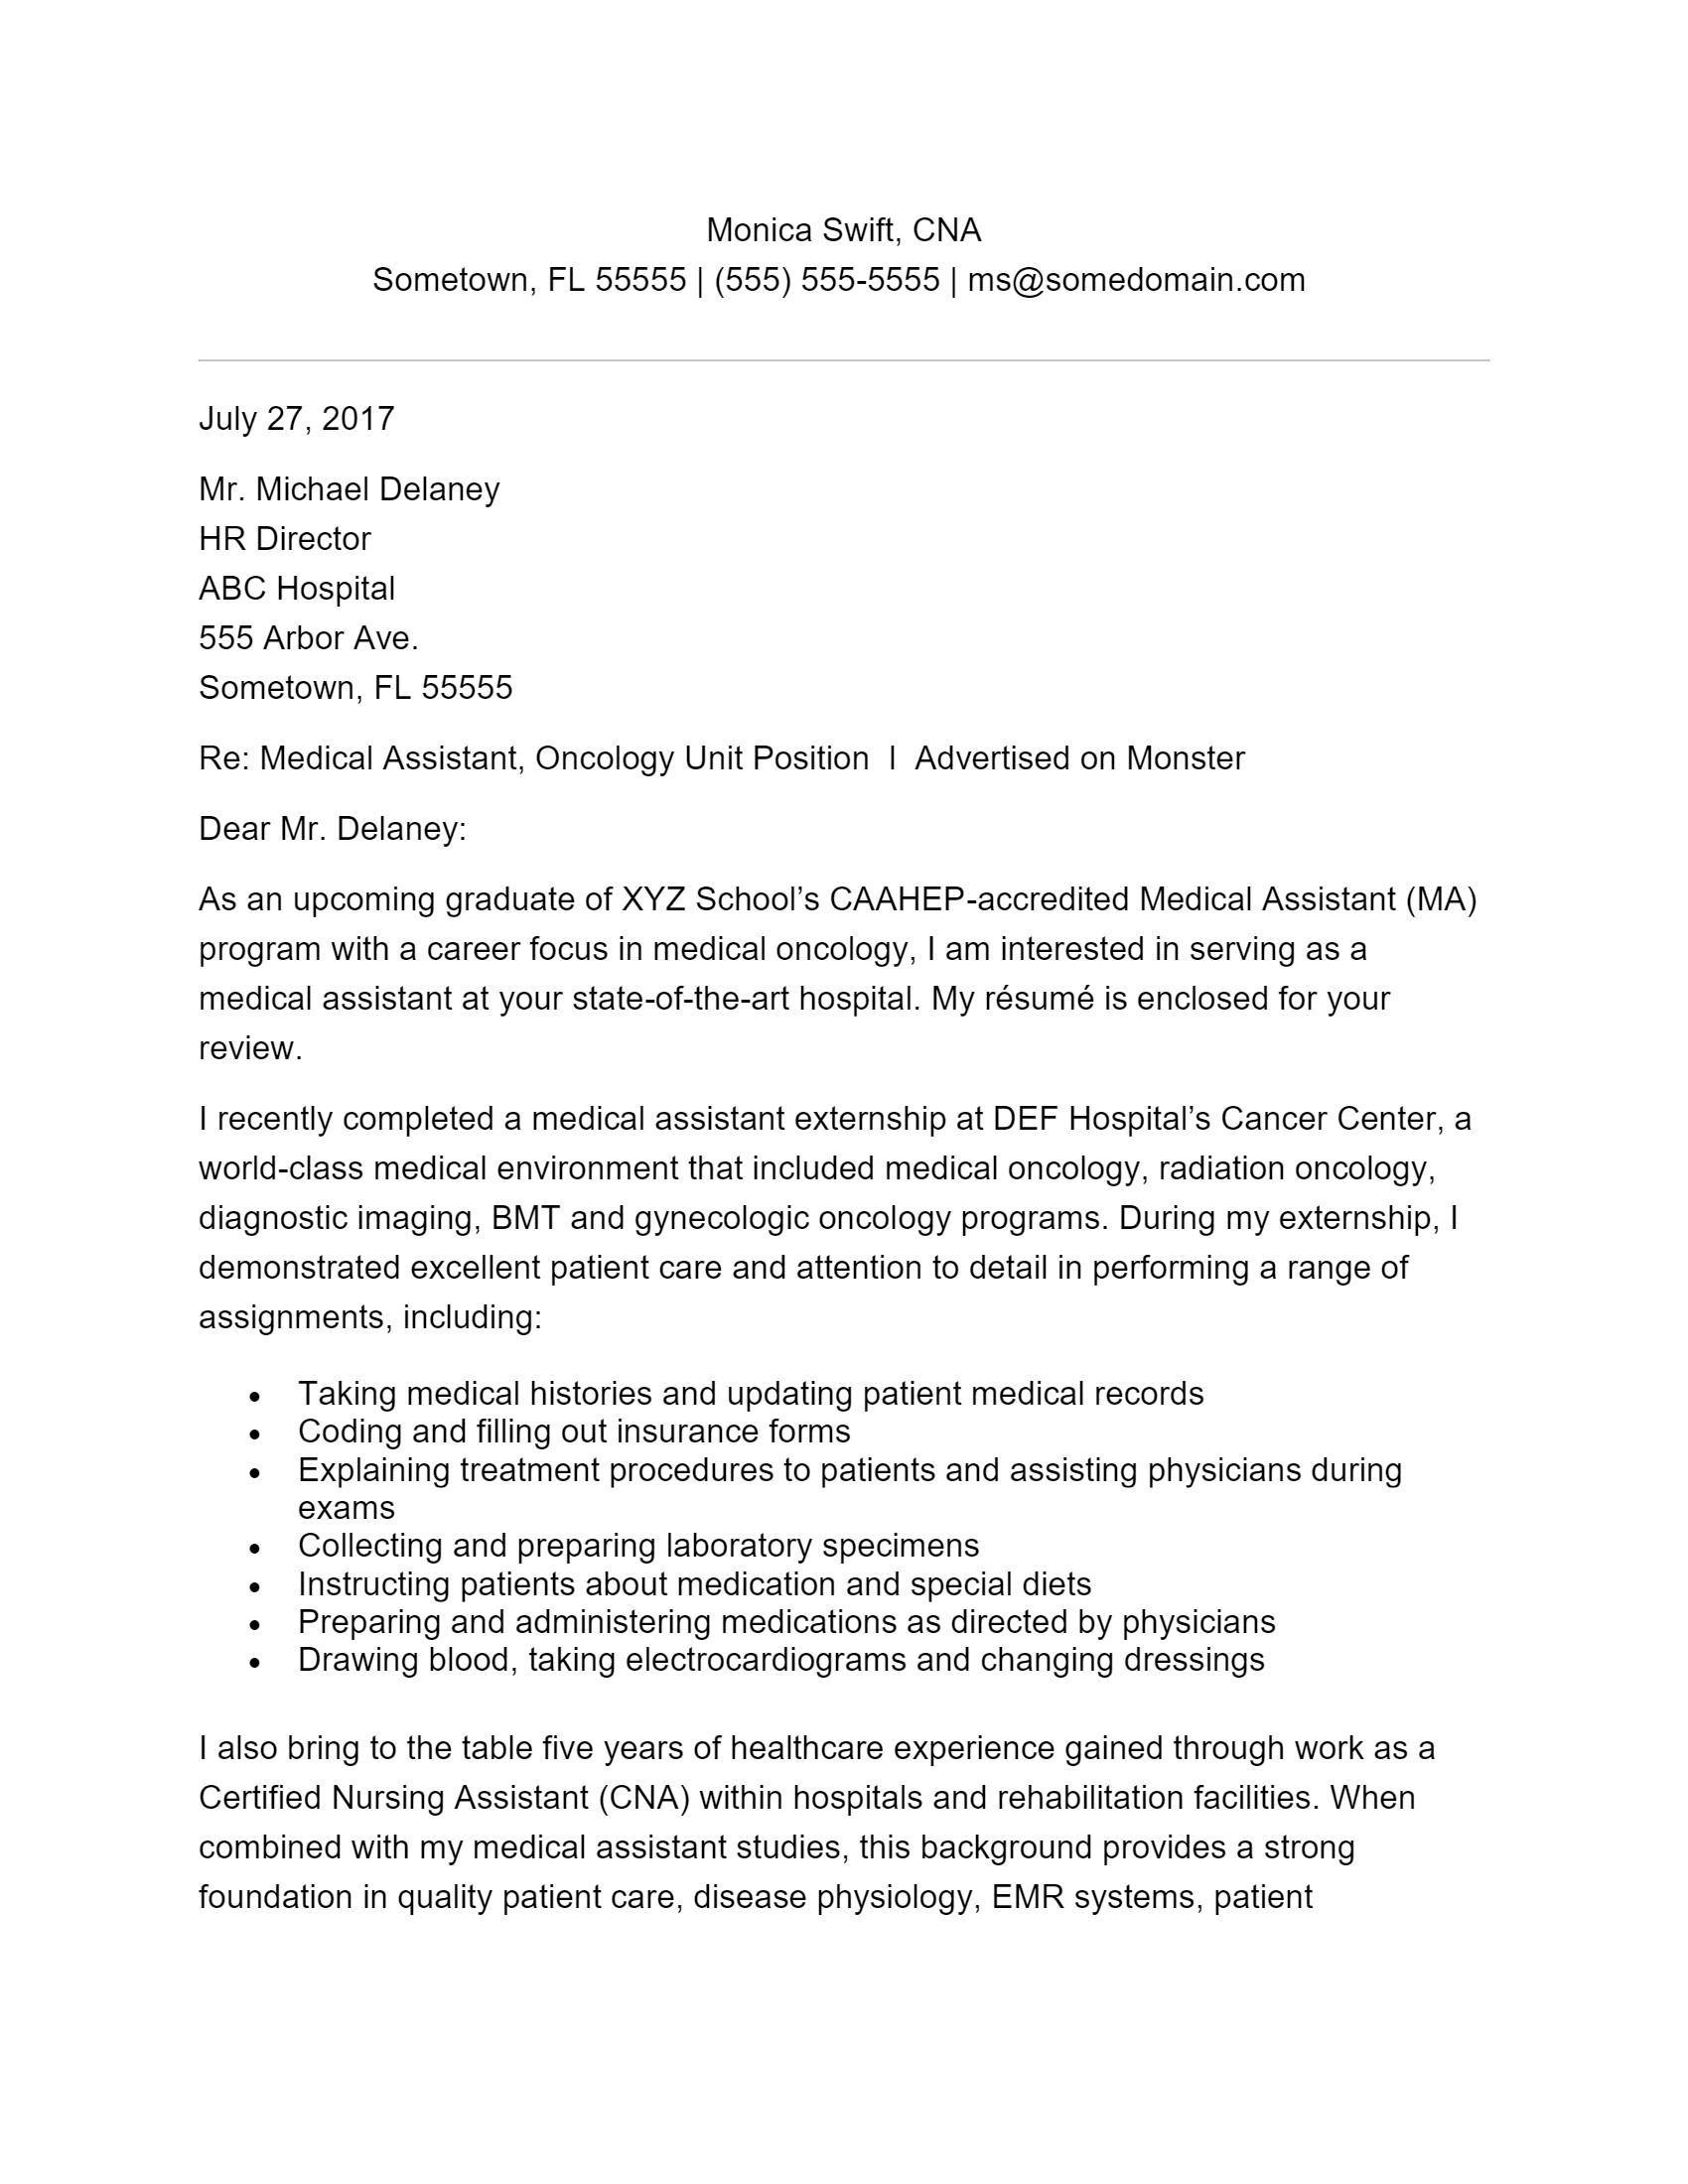 cover letter for resume for medical assistant